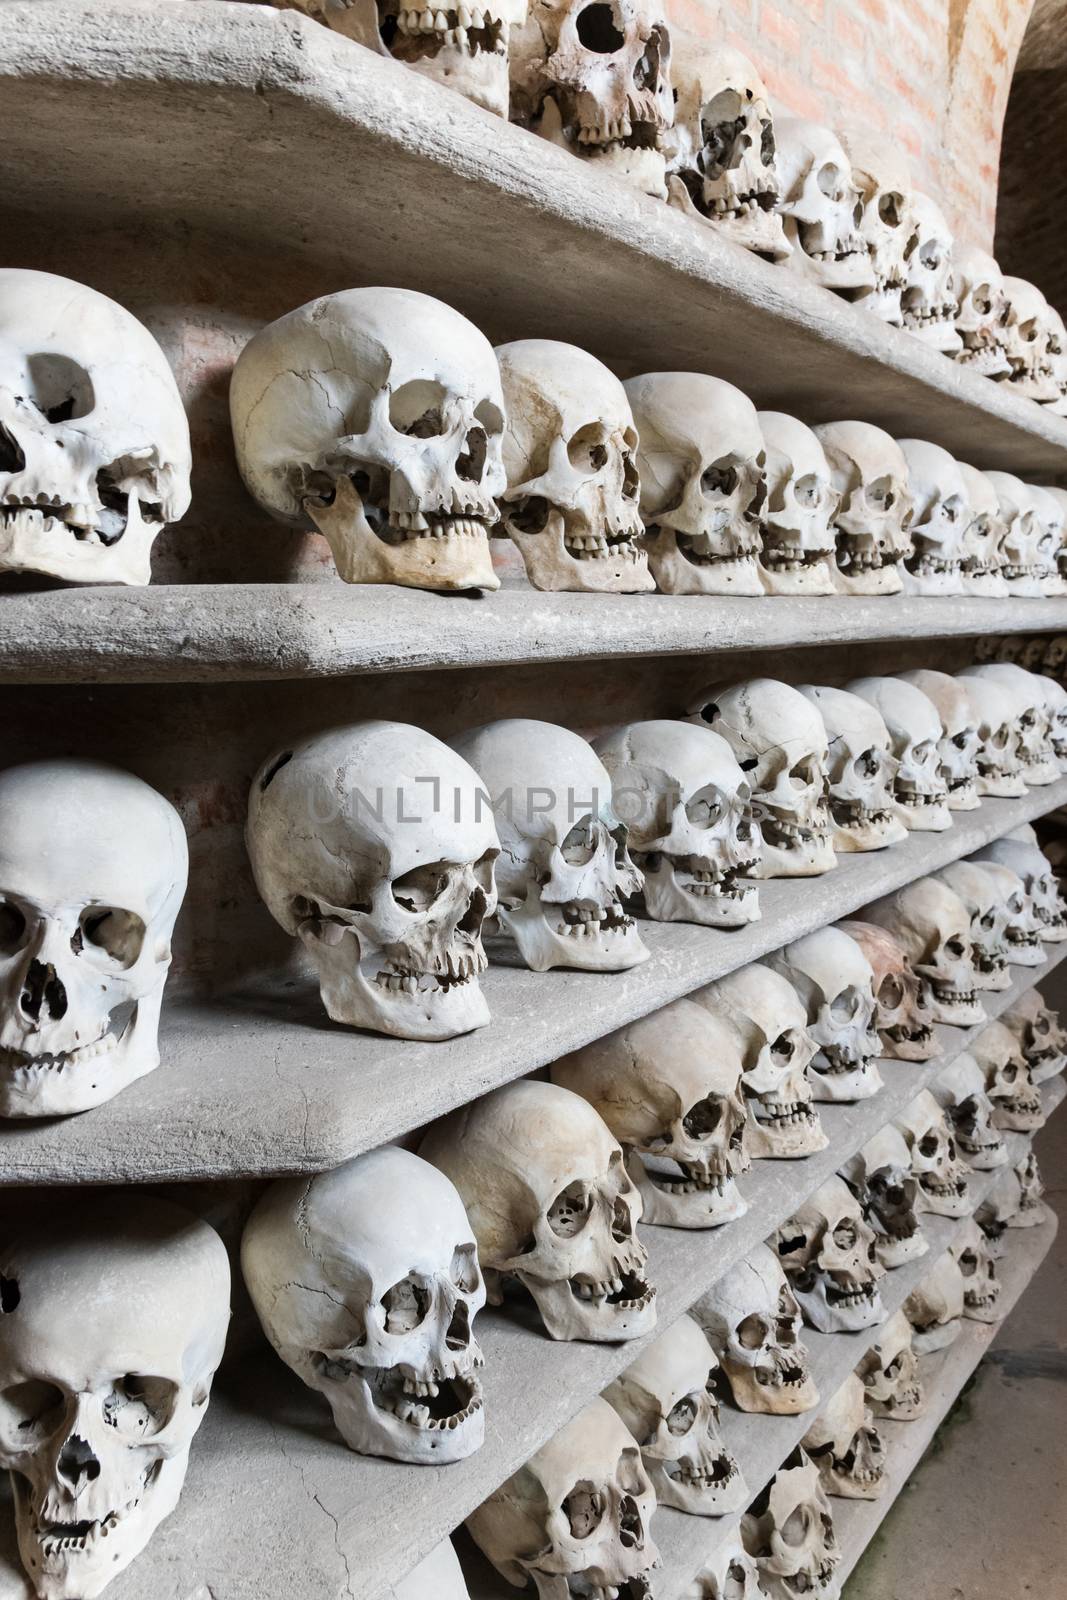 Human skulls inside a catacomb. by Isaac74